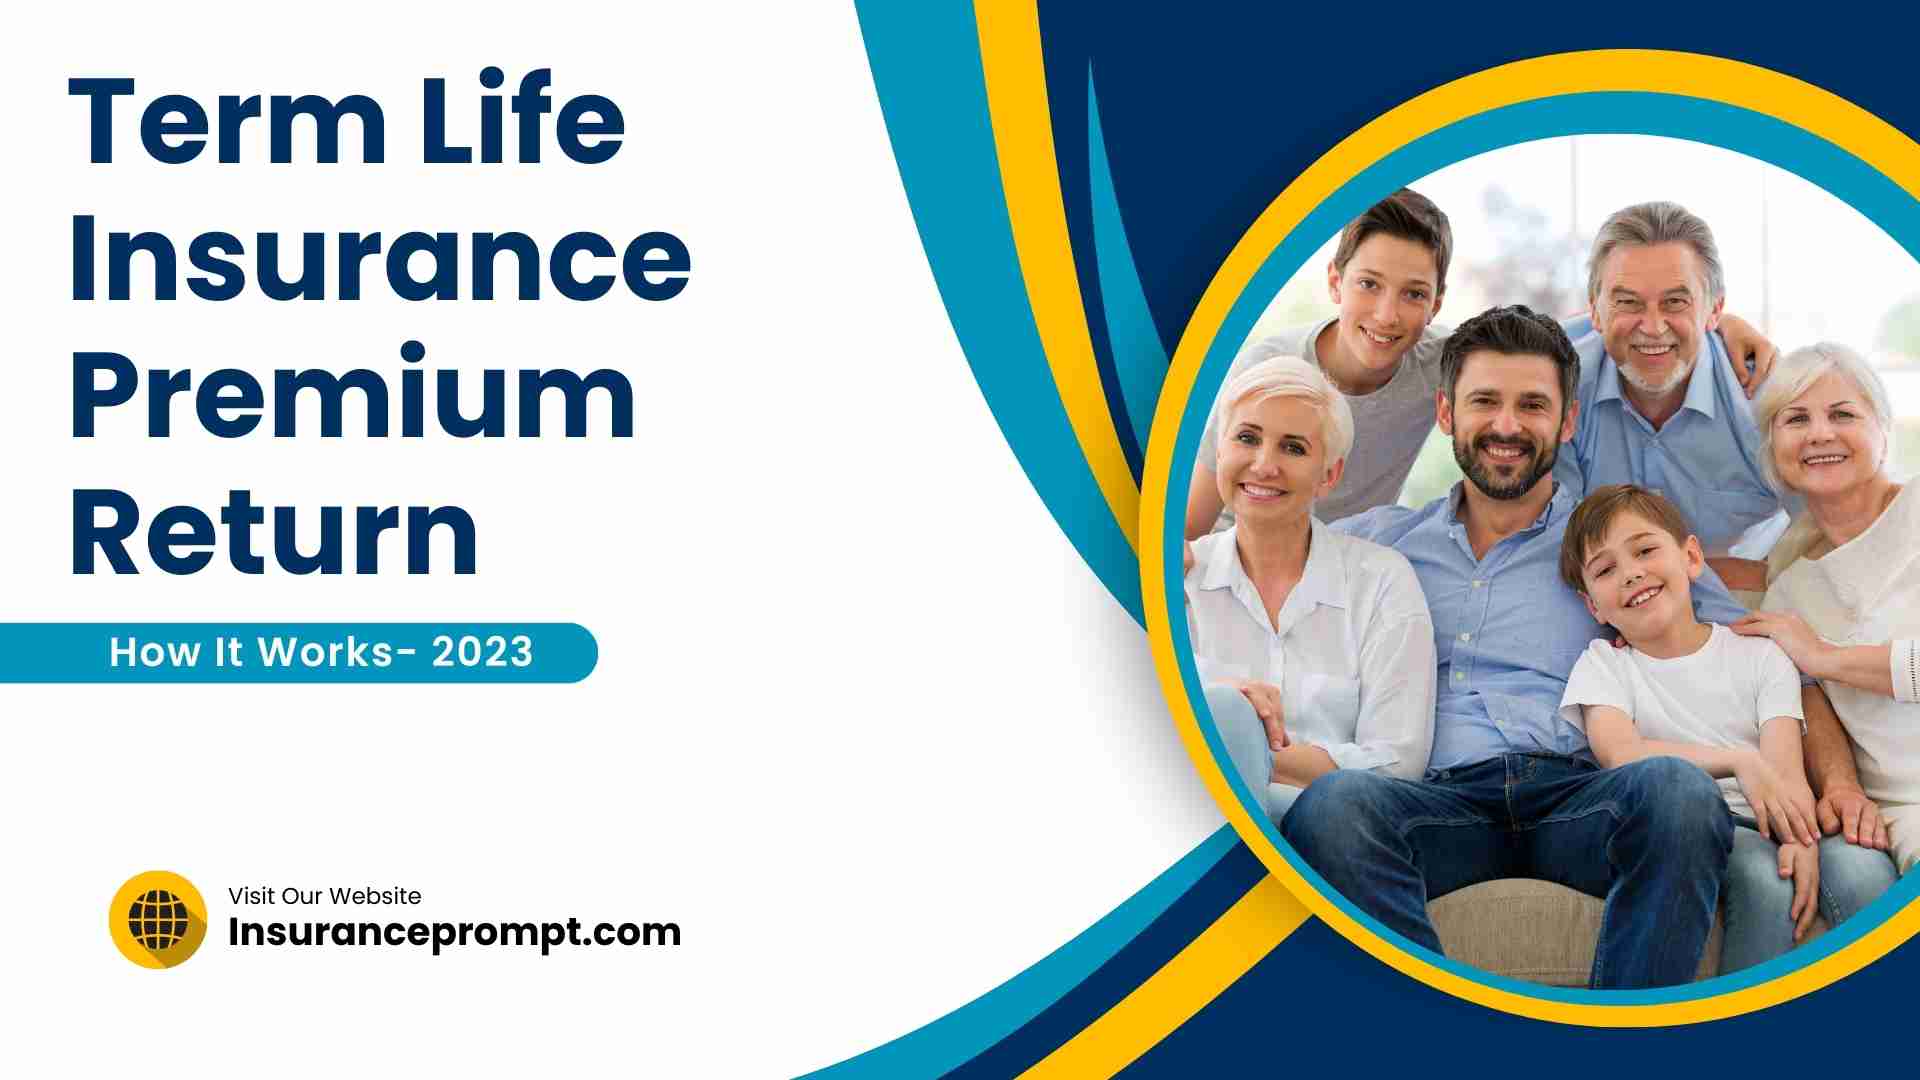 Term Life Insurance Premium Return